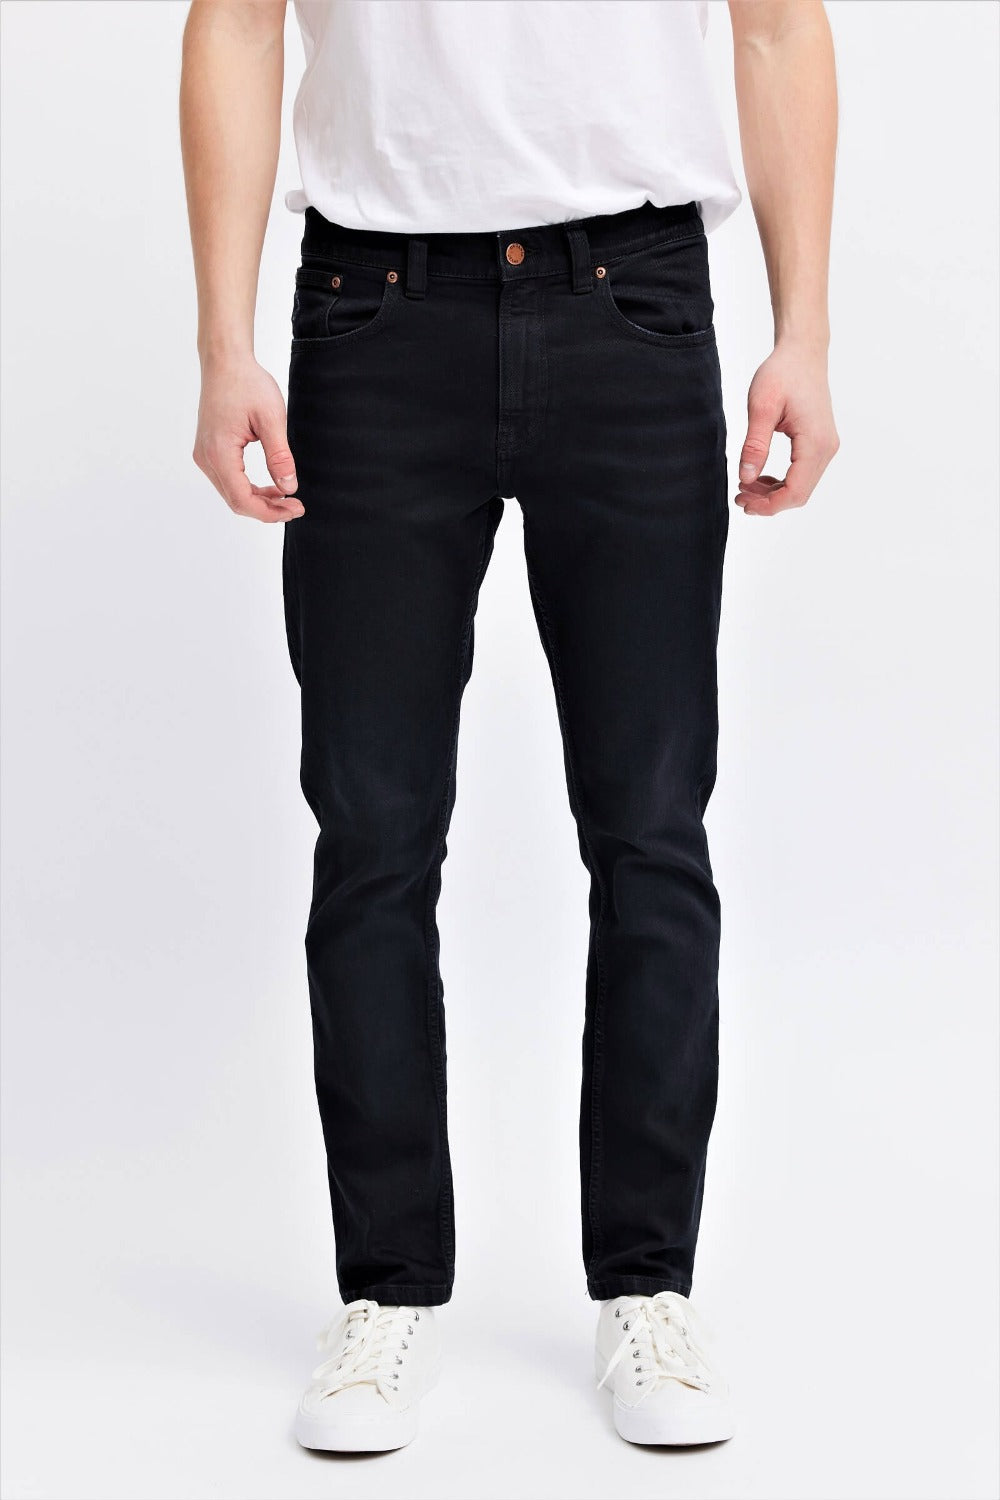 Jeans lease - black denim